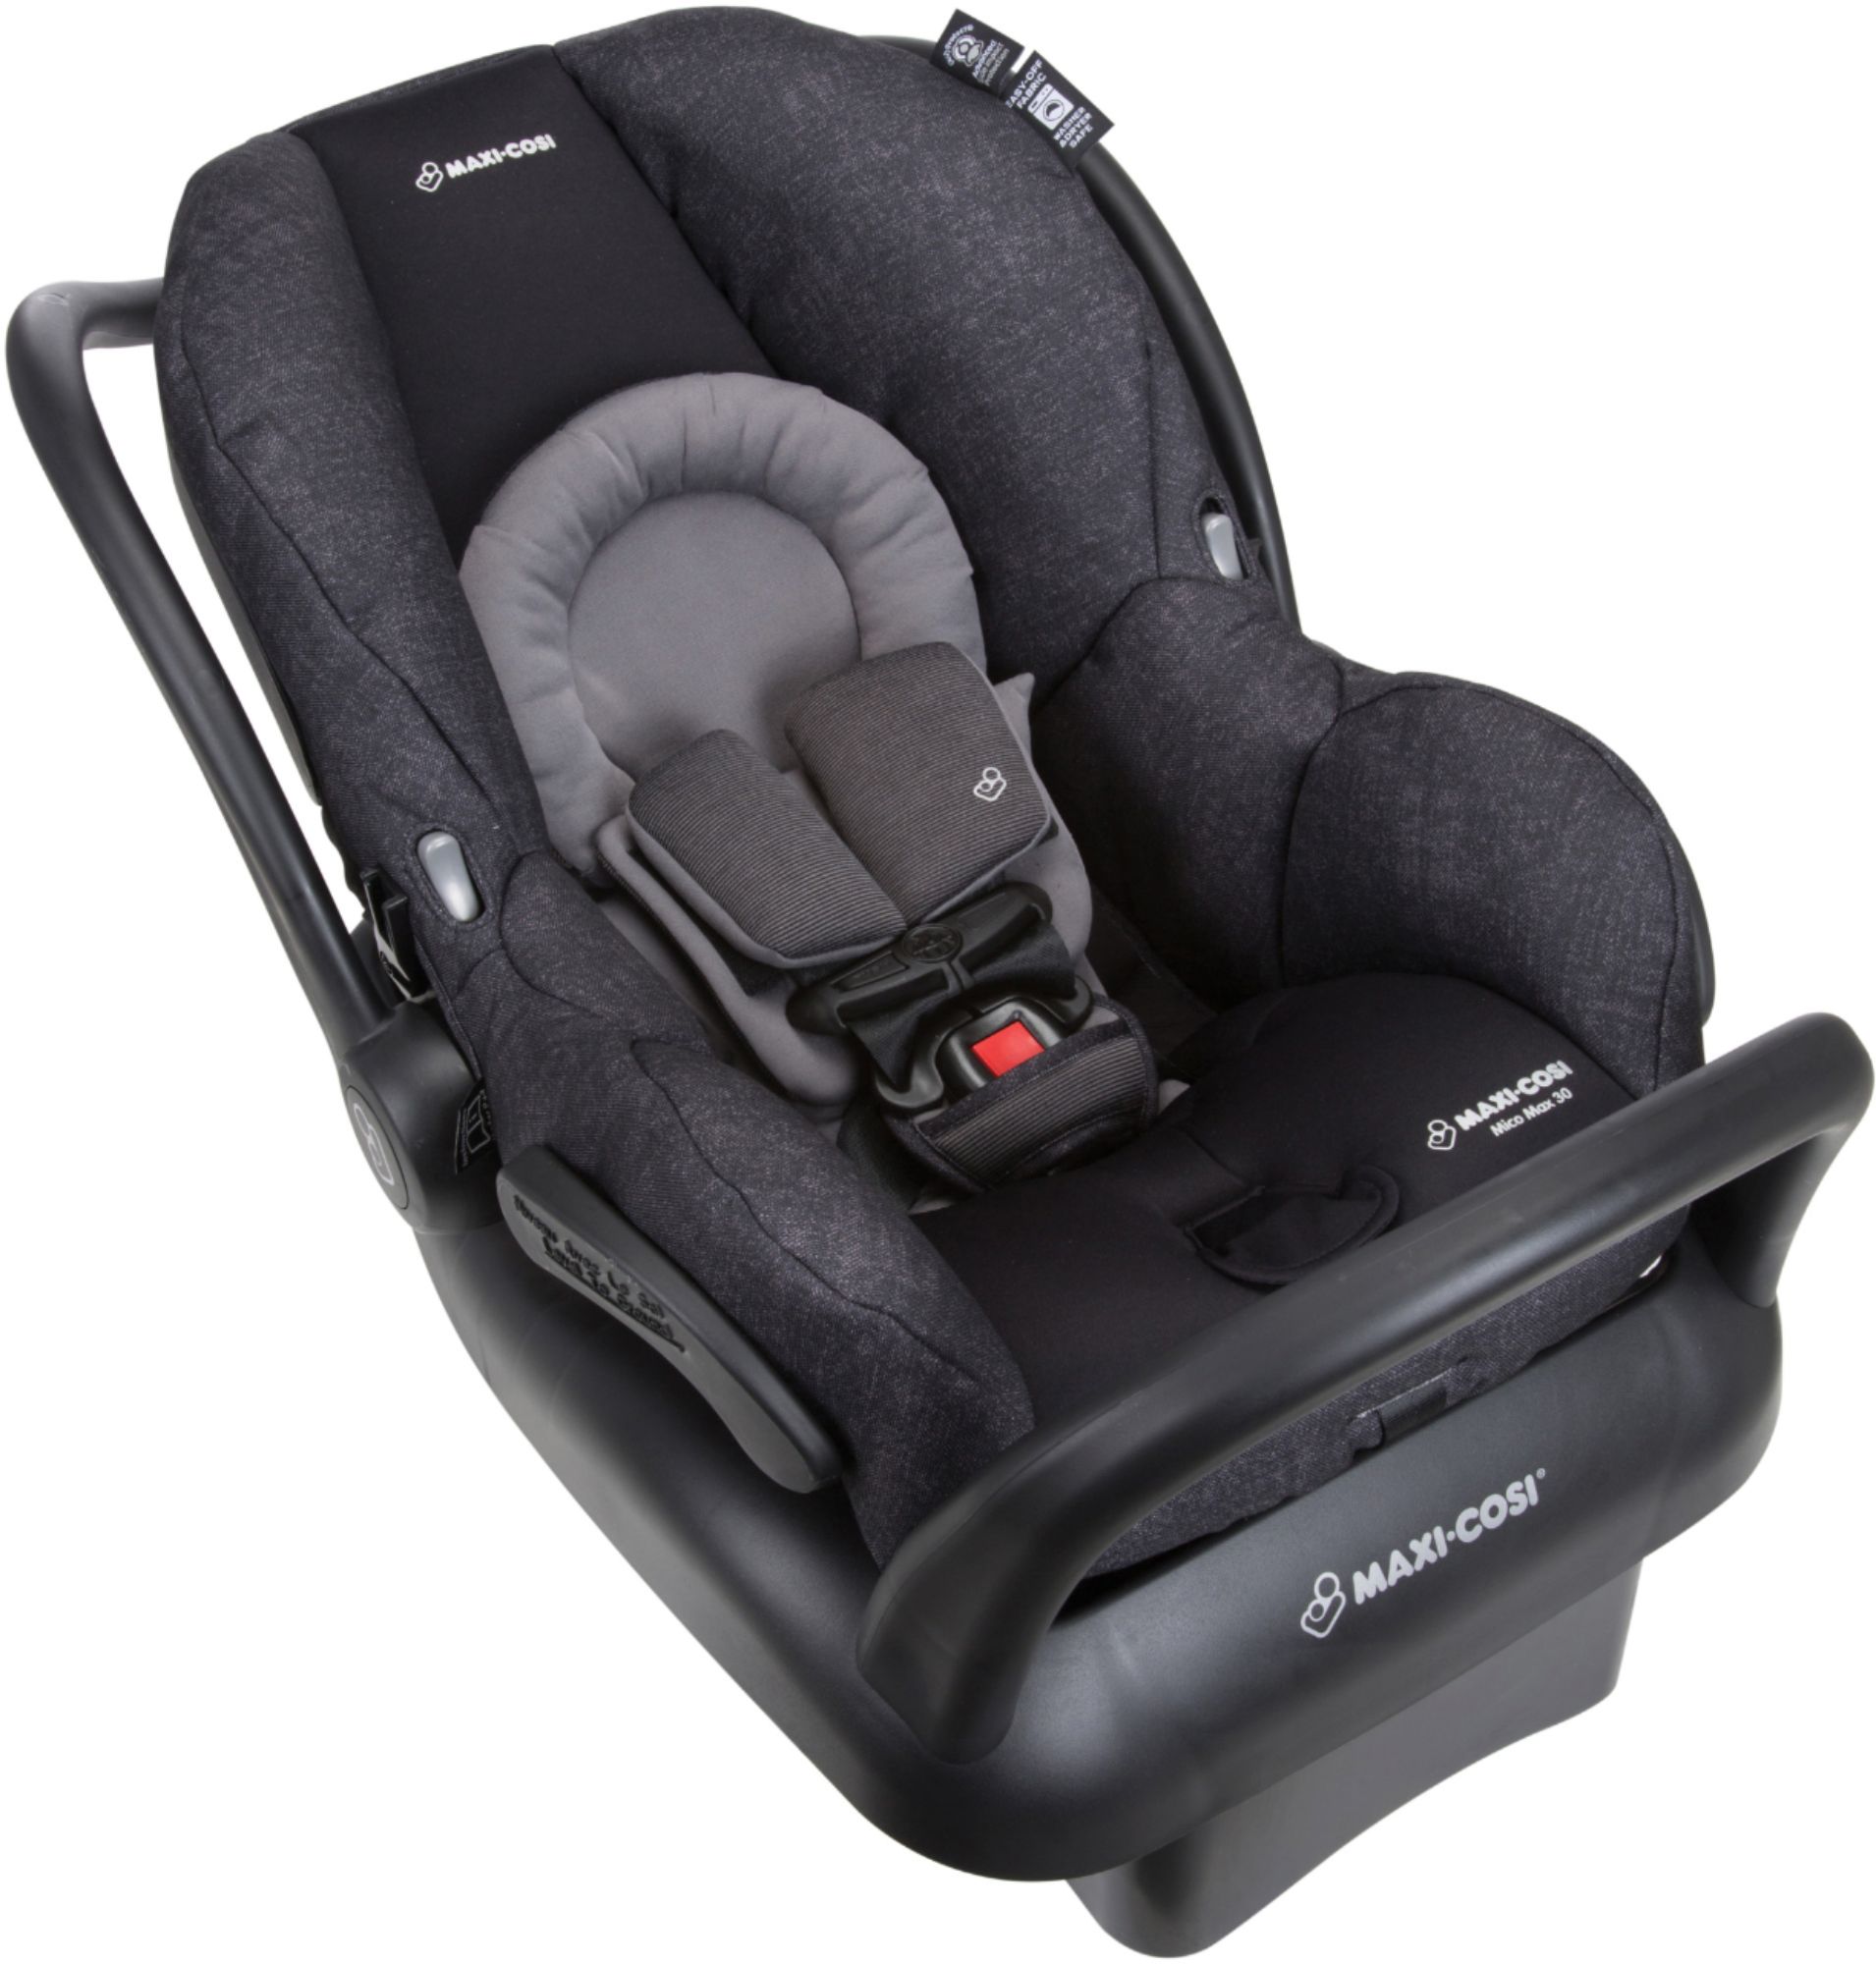 Maxi Cosi Mico Max 30 Infant Car Seat Black Ic302etka Best - Maxi Cosi Mico Car Seat Weight Limit